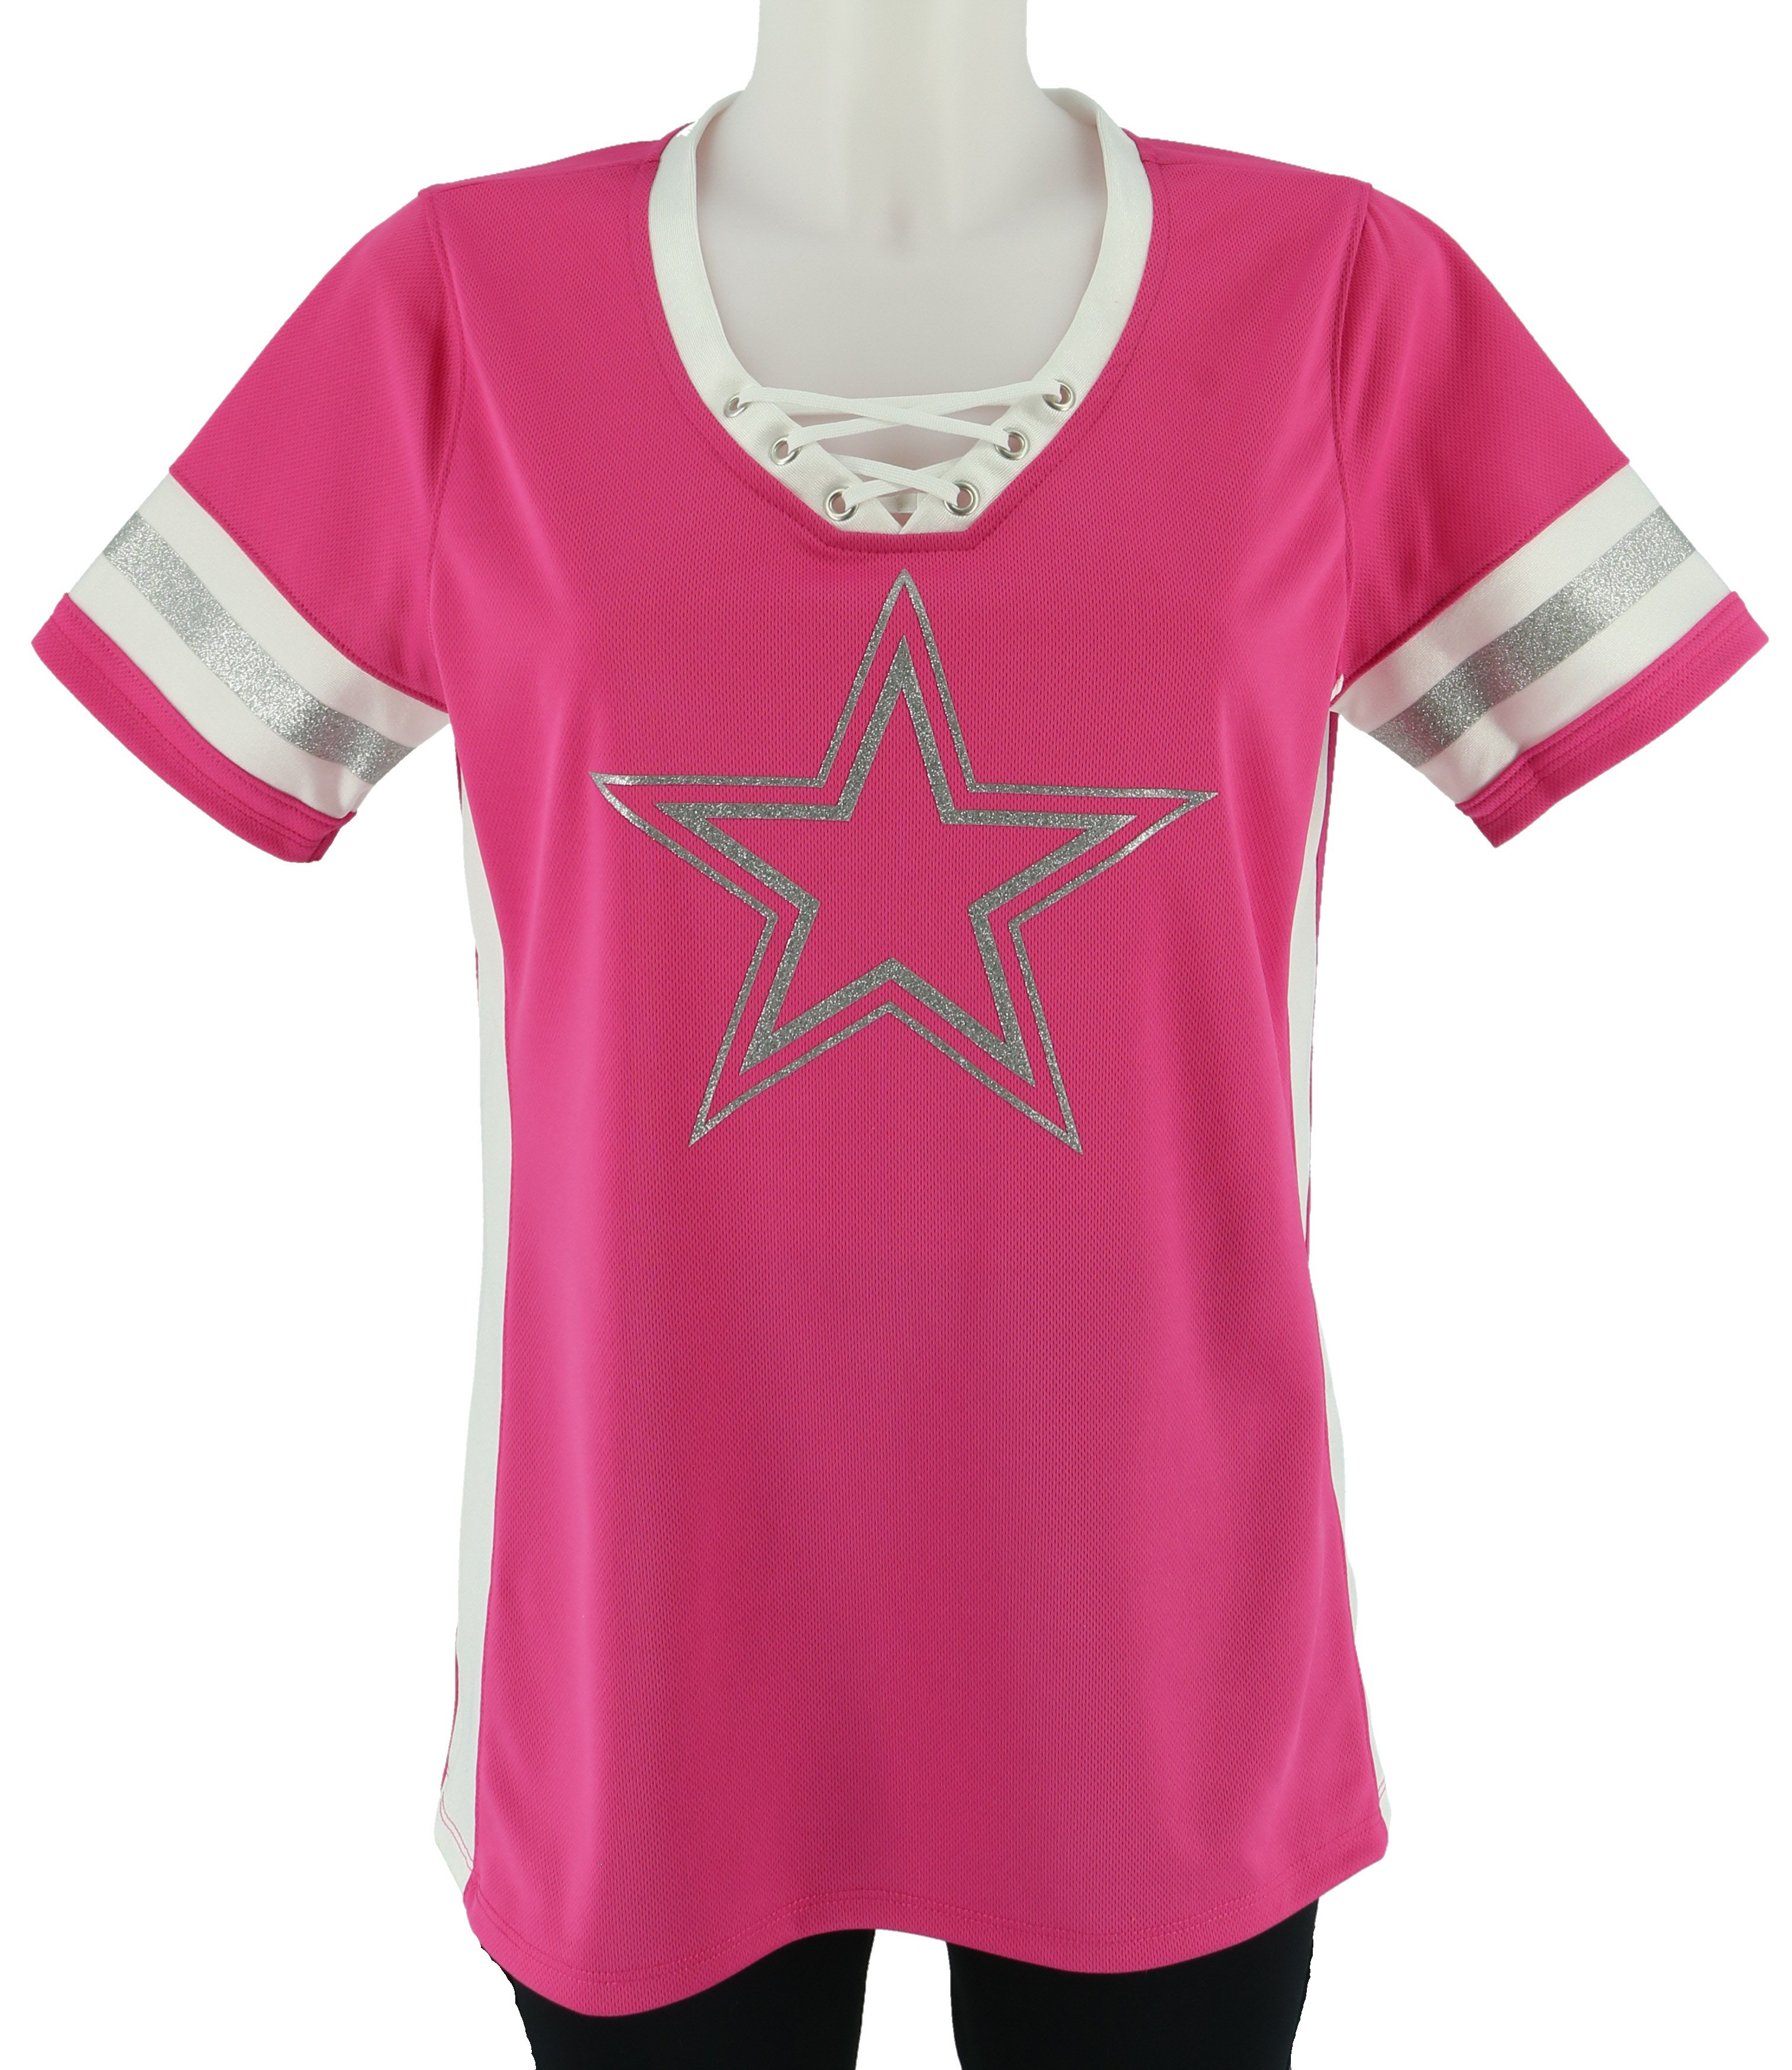 Dallas Cowboys Women's Pink Star Jersey Top - Shop Team Apparel at H-E-B